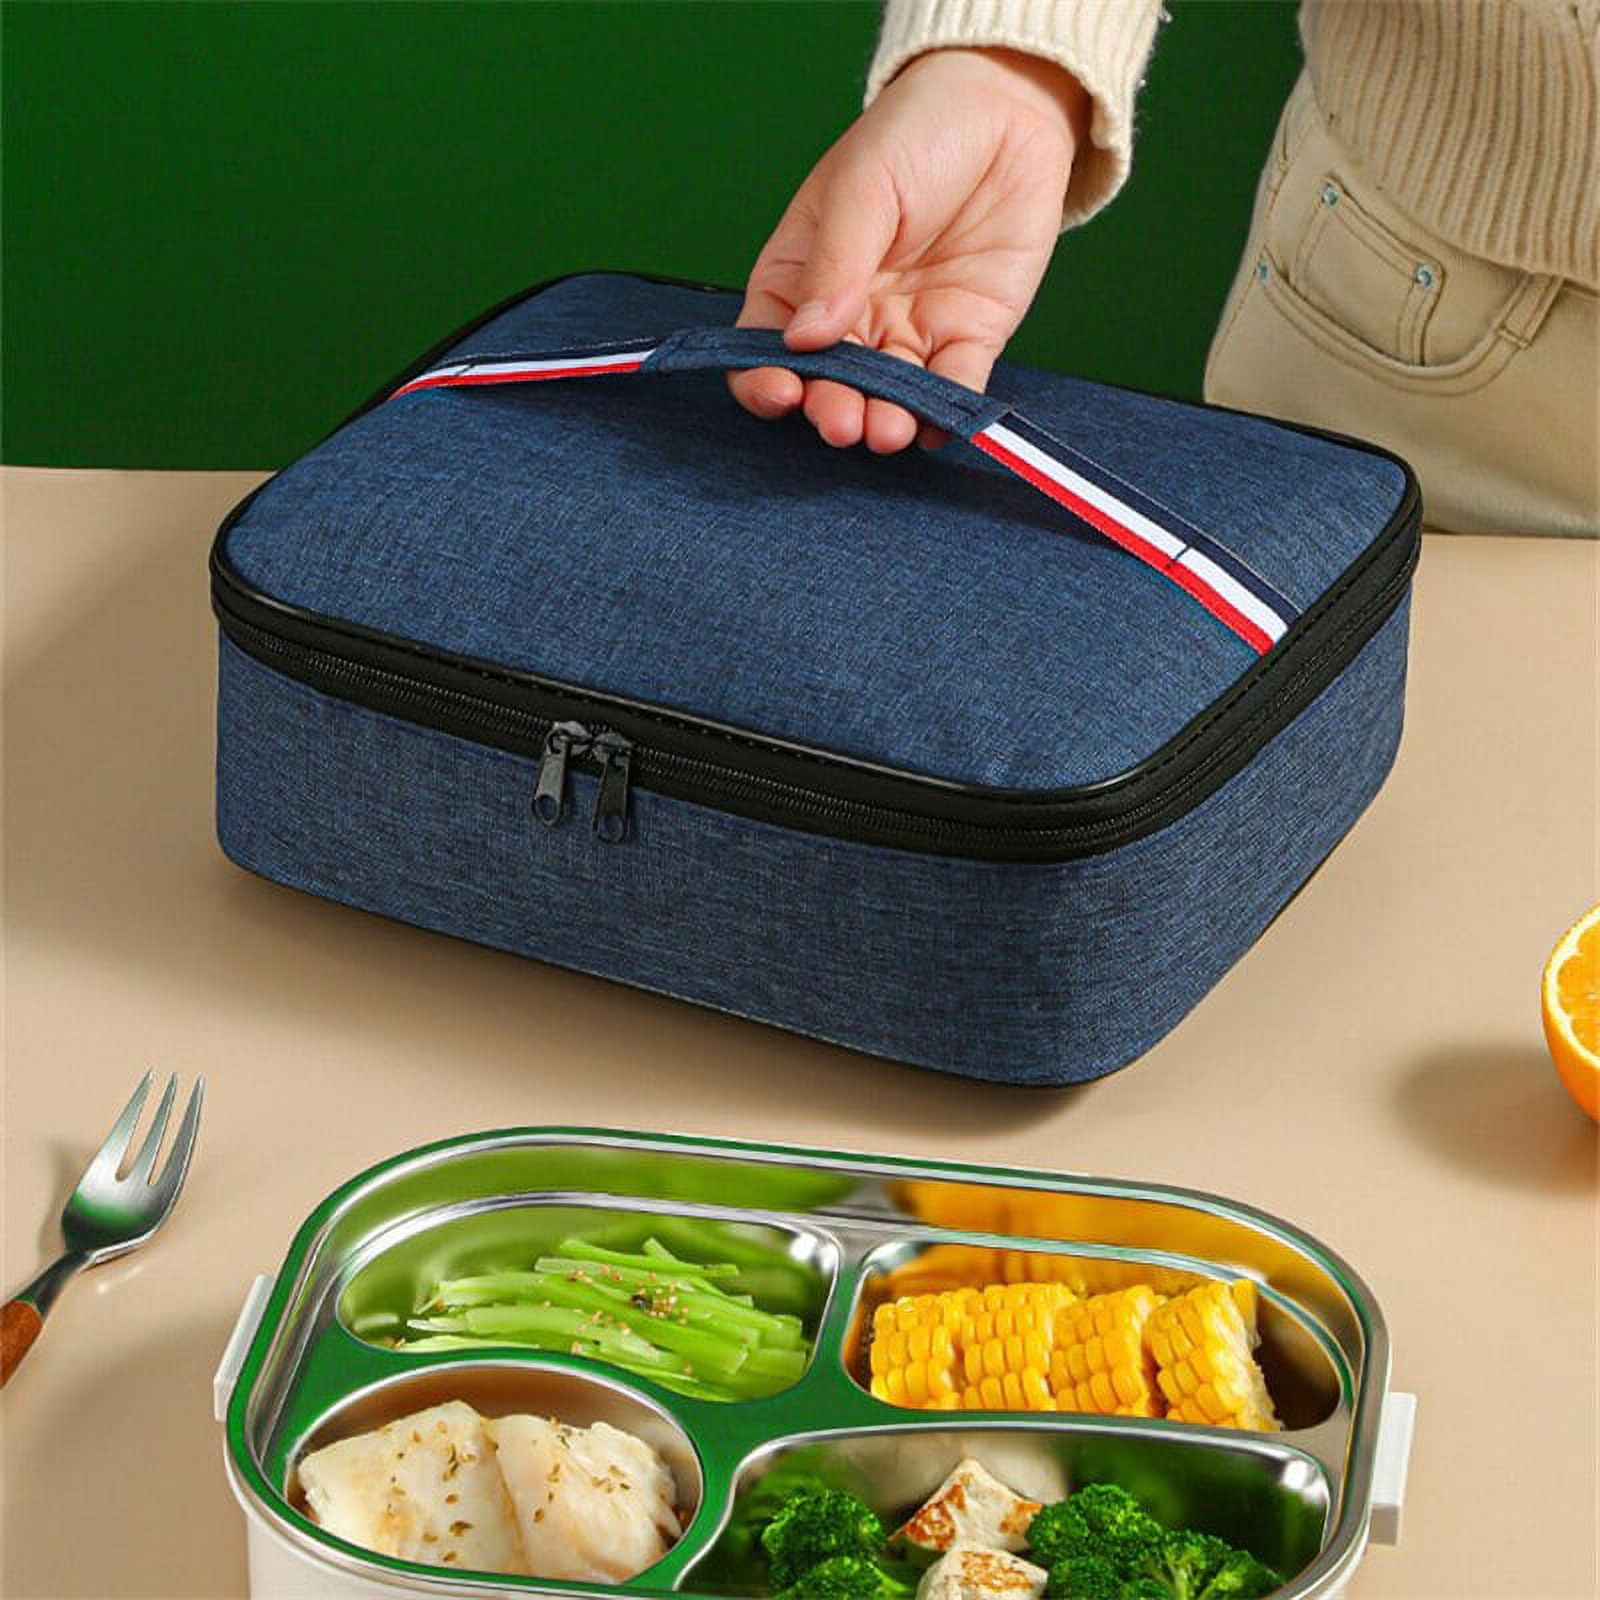 Plaid Tartan hanksgiving Pumpkins Lunch Box Women Lunch Bag with